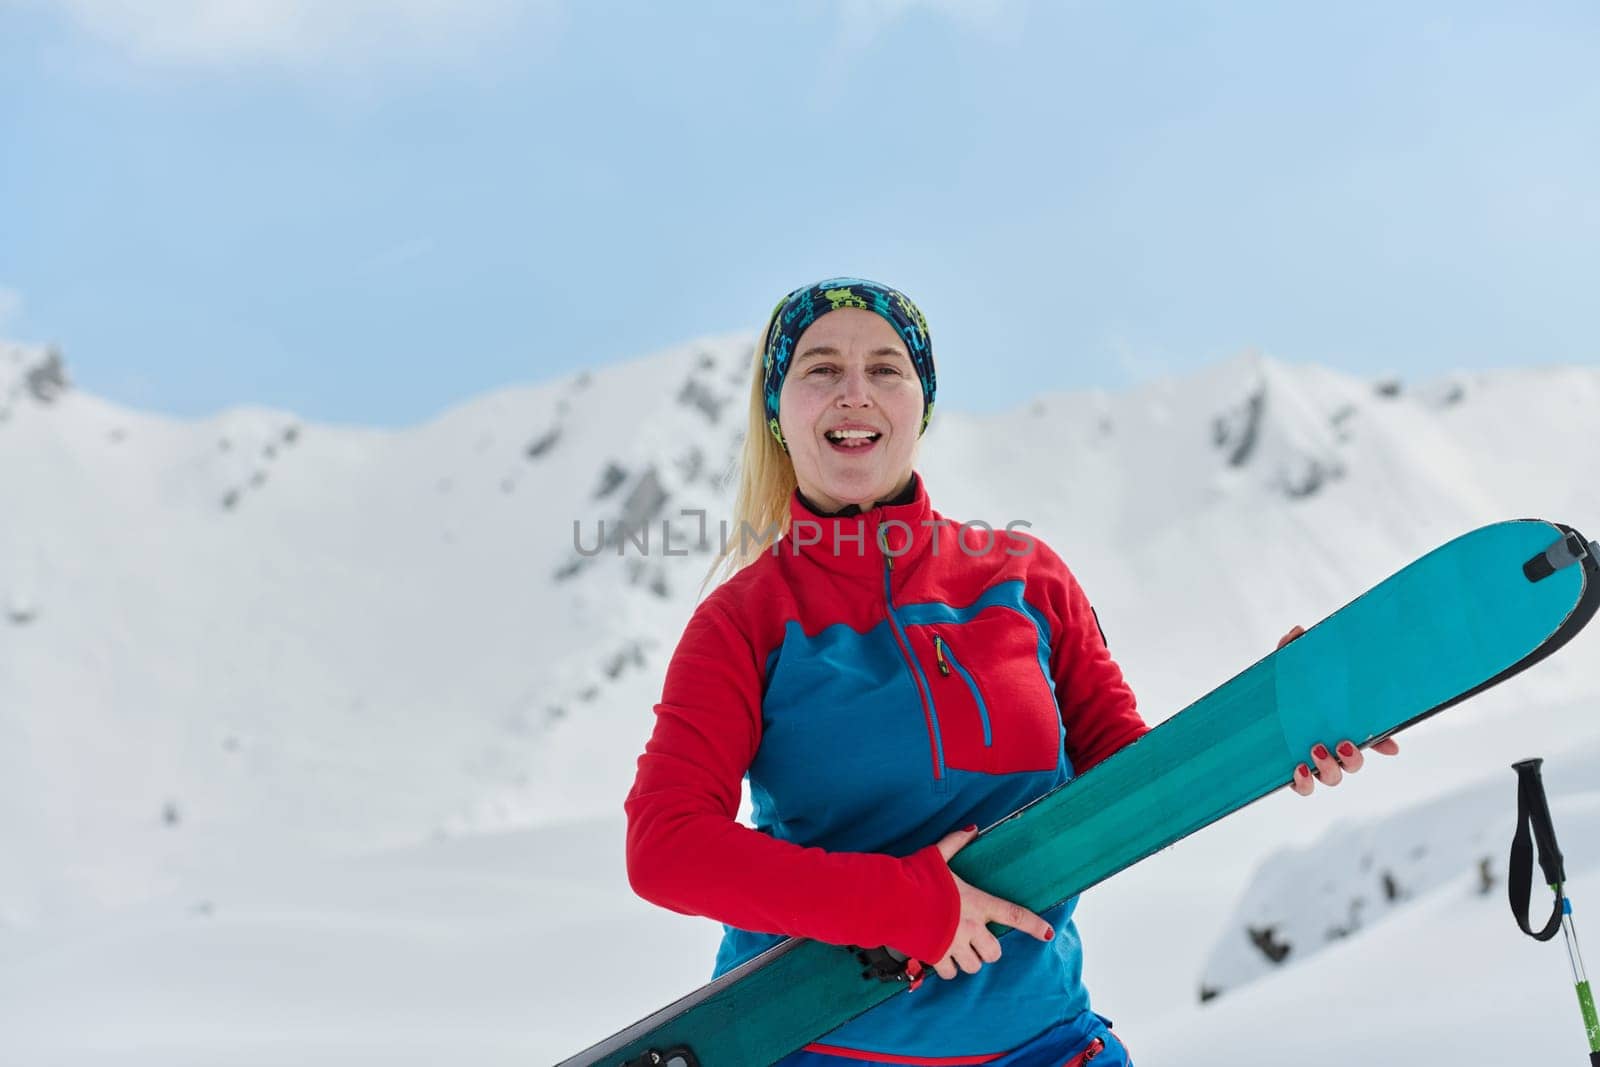 Conquering the Peak: Confident Skier Celebrates Success by dotshock